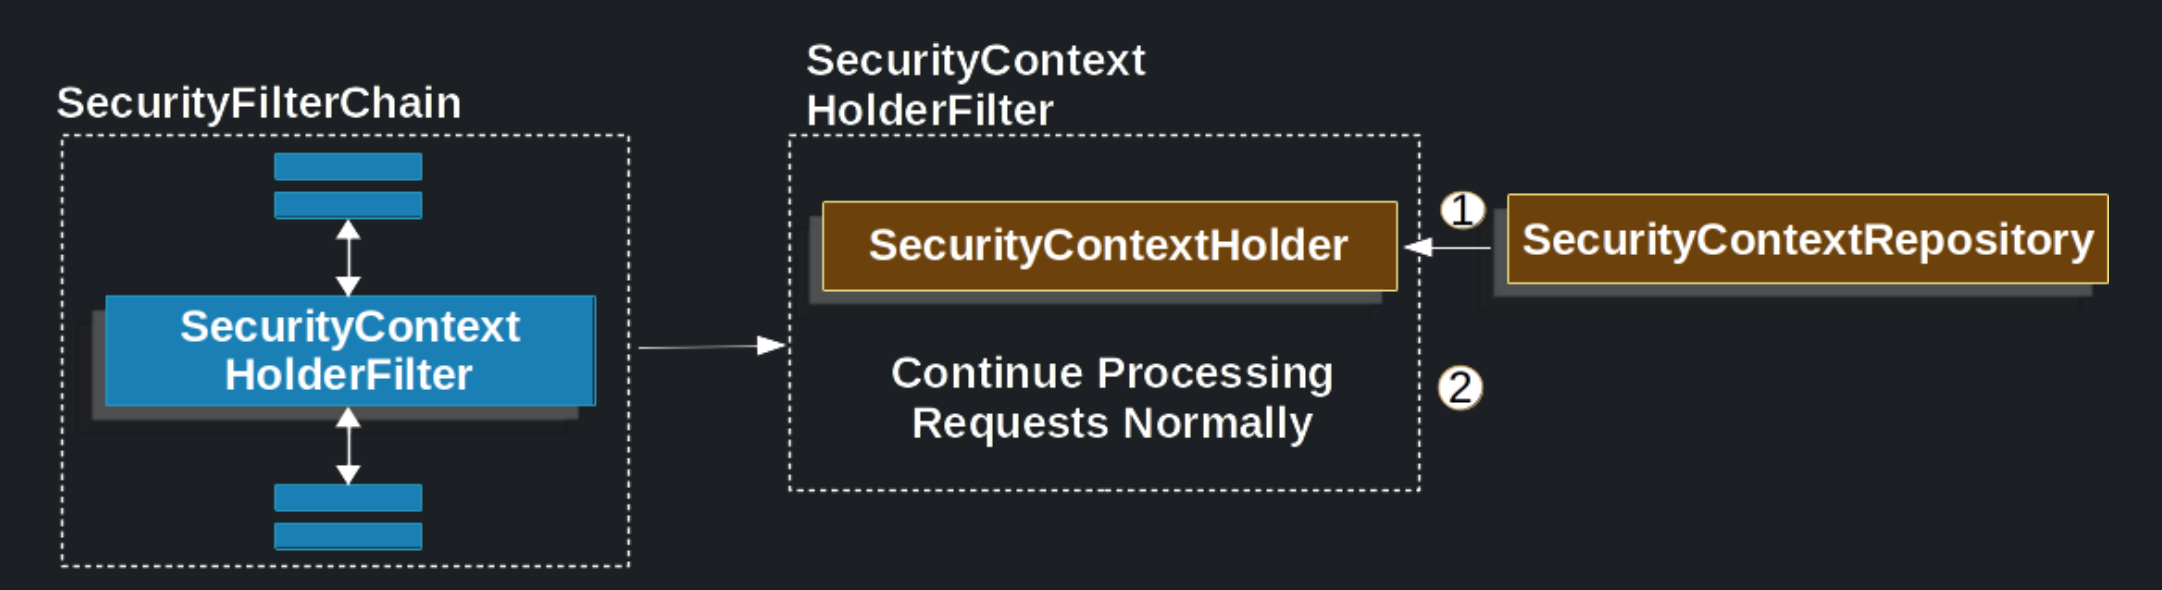 SecurityContextHolderFilter 동작 과정